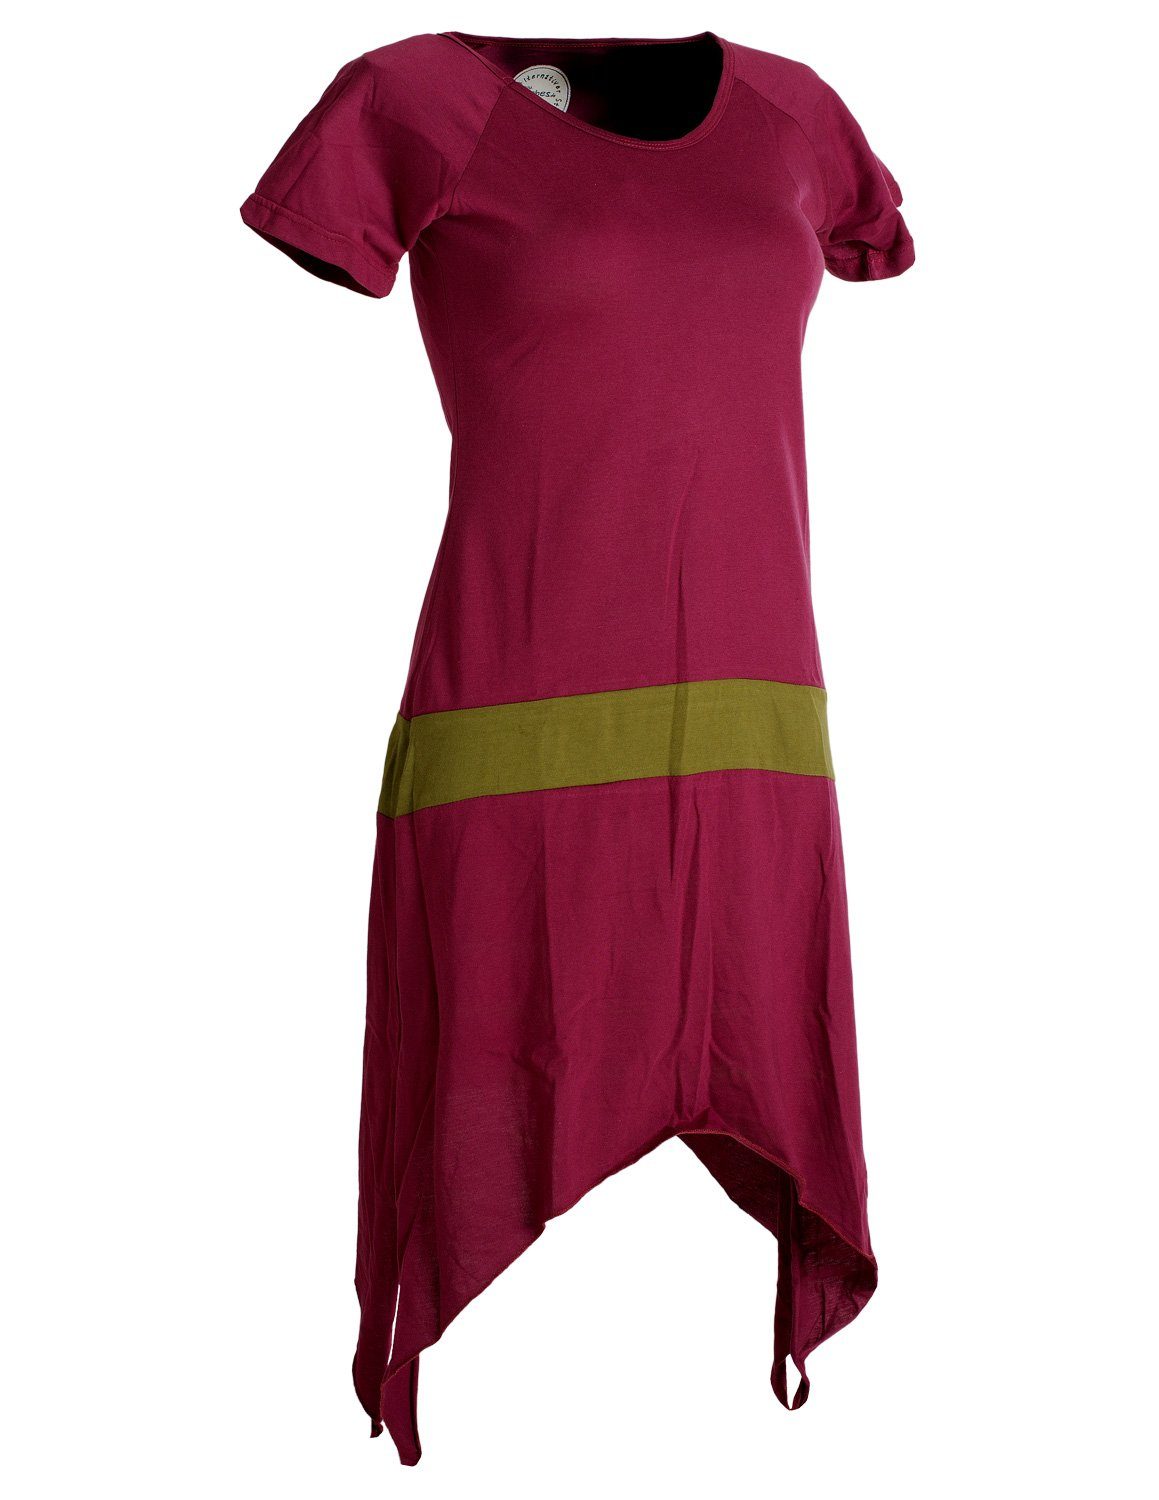 kurzärmliges Sommerkleid Style Einfaches Tunika, Longshirt, dunkelrot aus Baumwolle Vishes Hippie Zipfelkleid